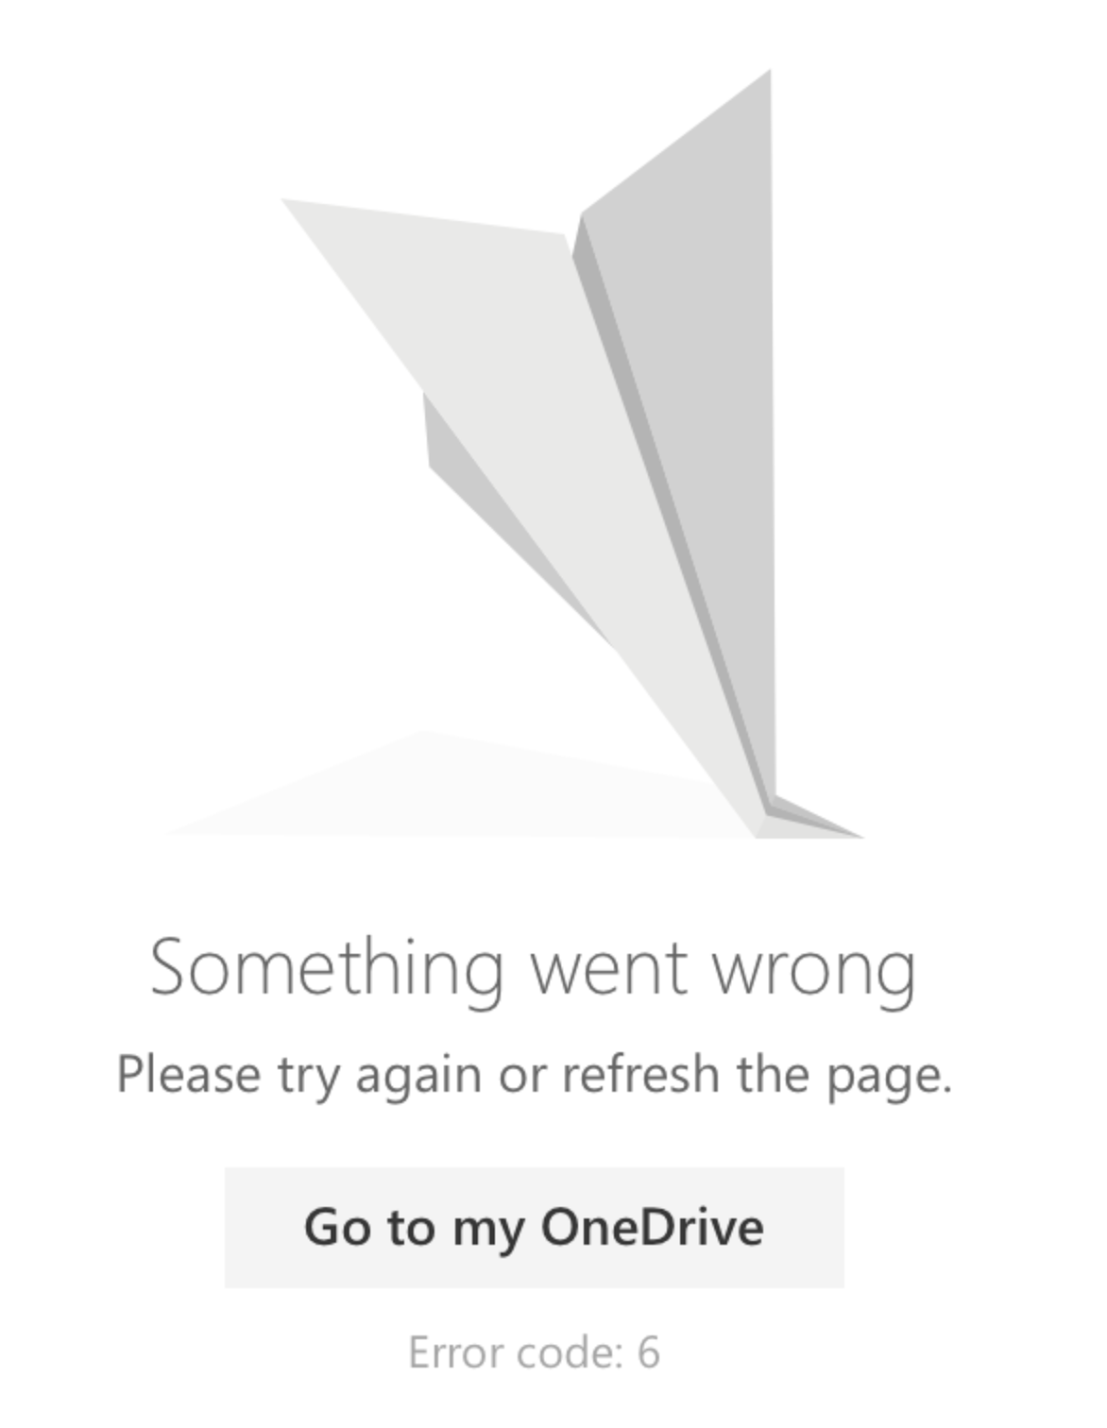 How to fix the OneDrive web error code 6